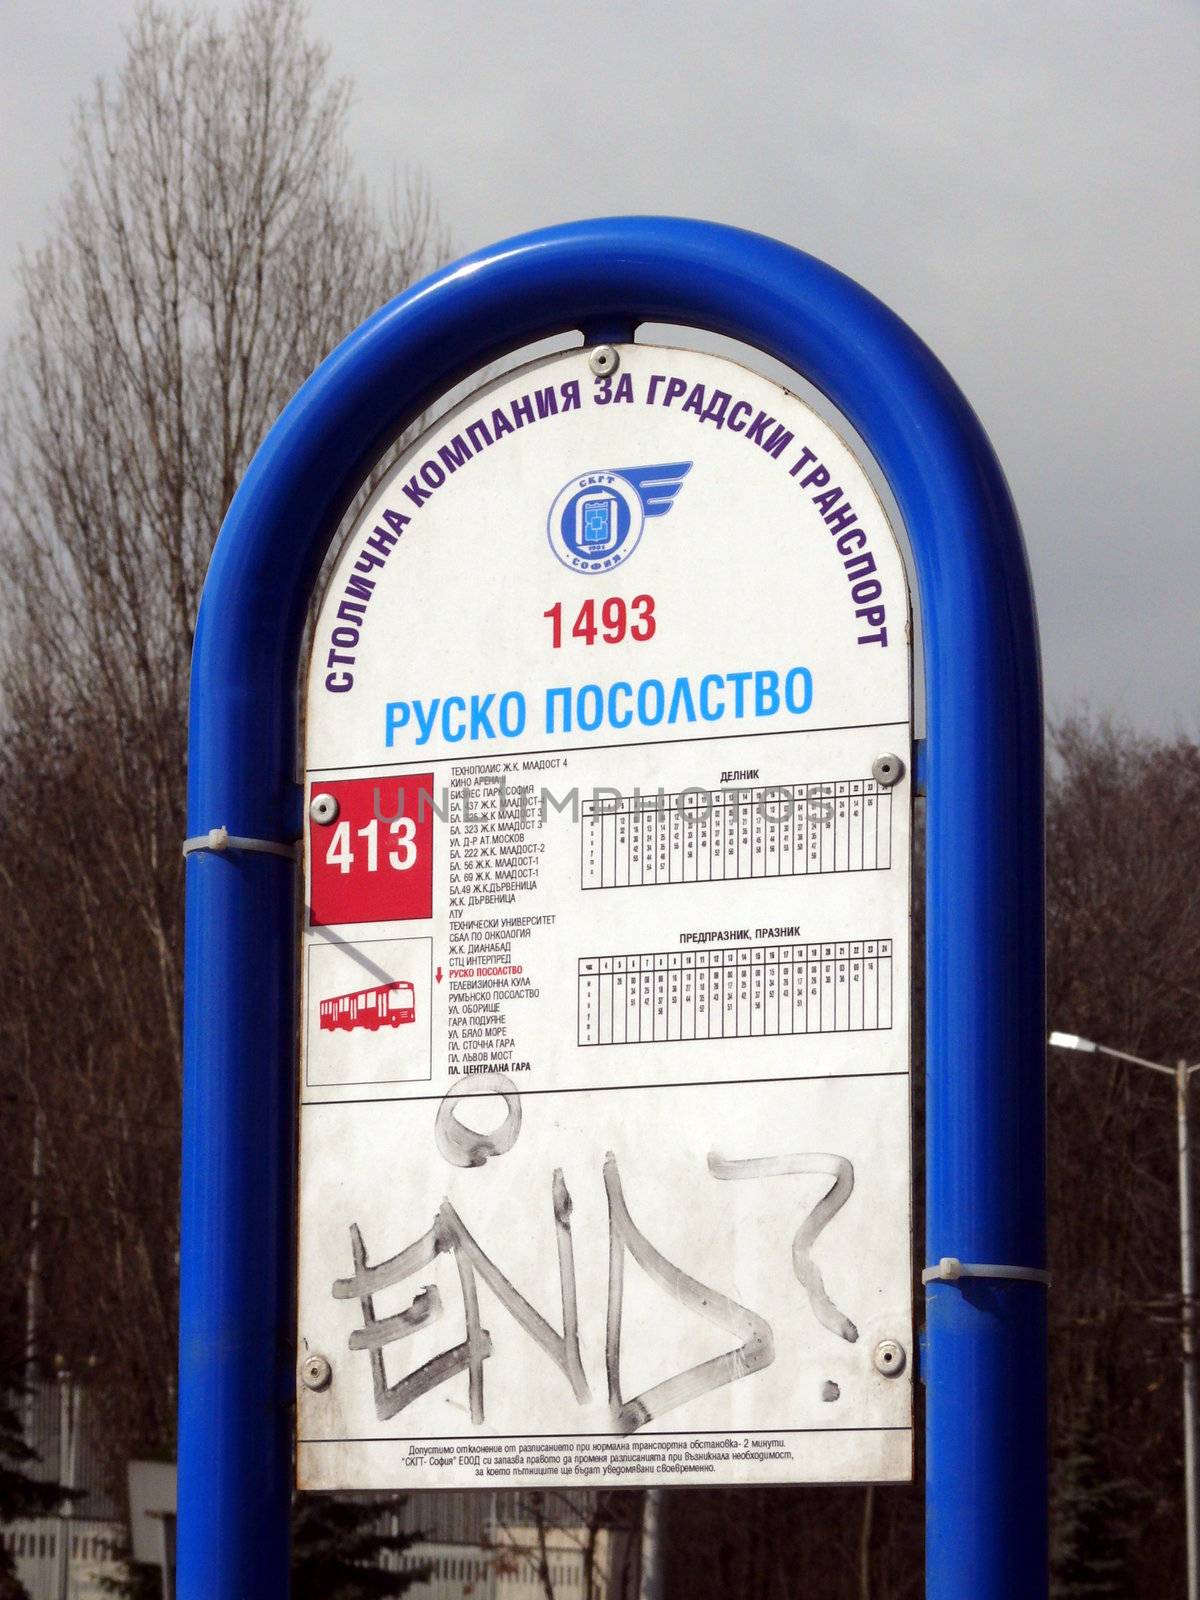 Bus stop near embassy of Russian Federation in Sofia, Bulgaria by Stoyanov